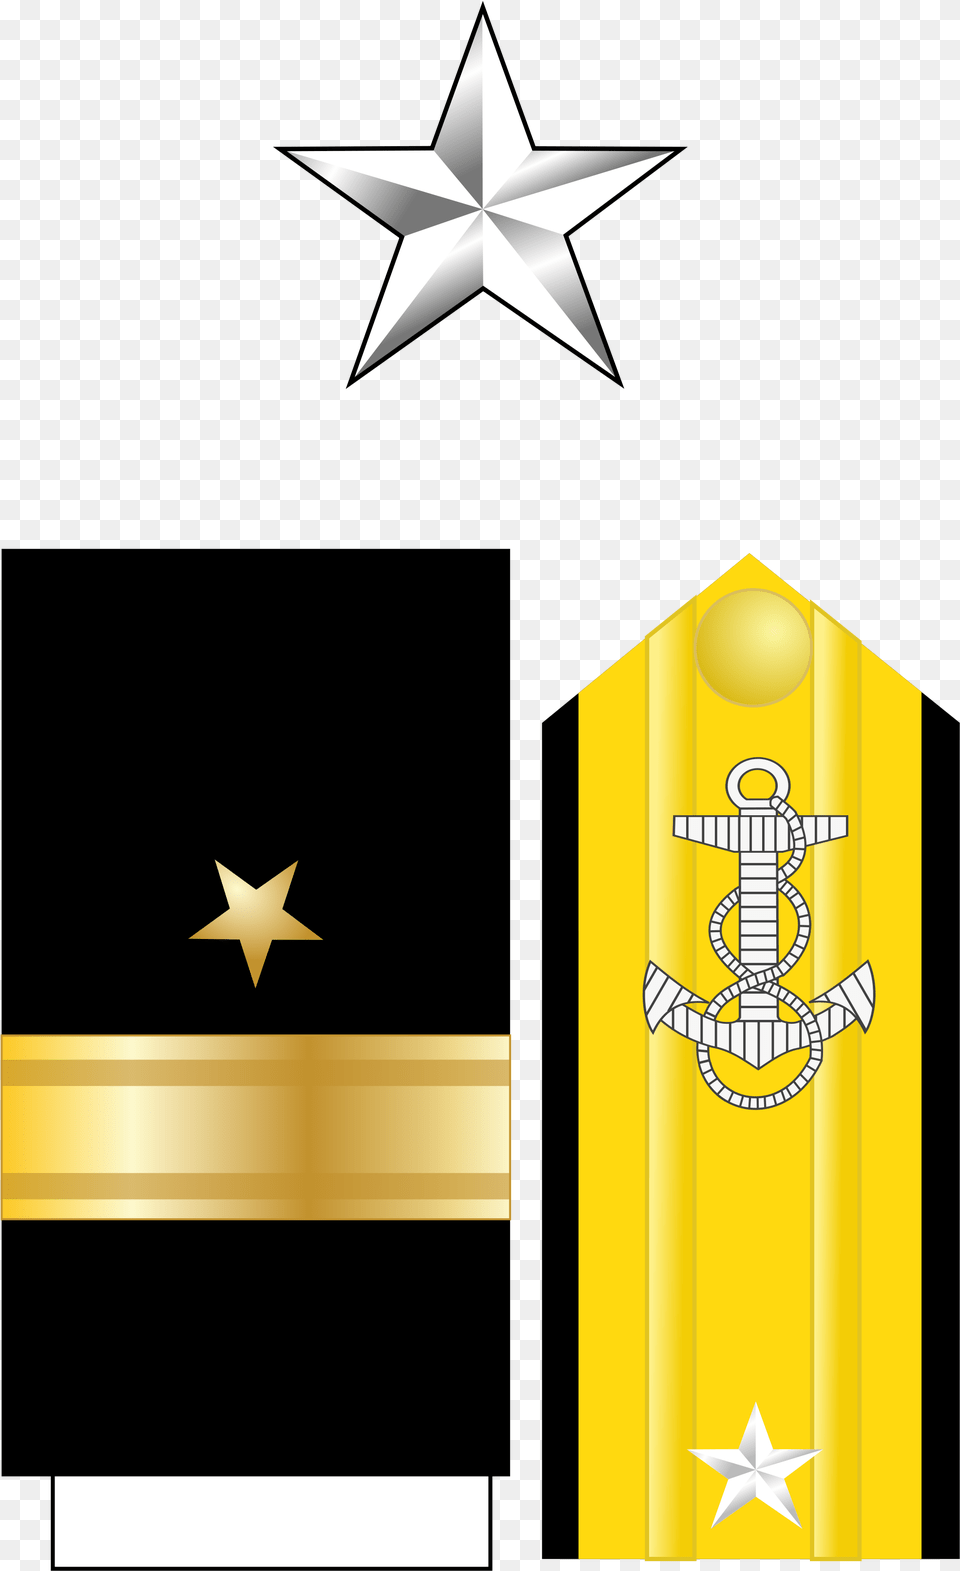 Commodore Rank Us Navy, Star Symbol, Symbol Png Image